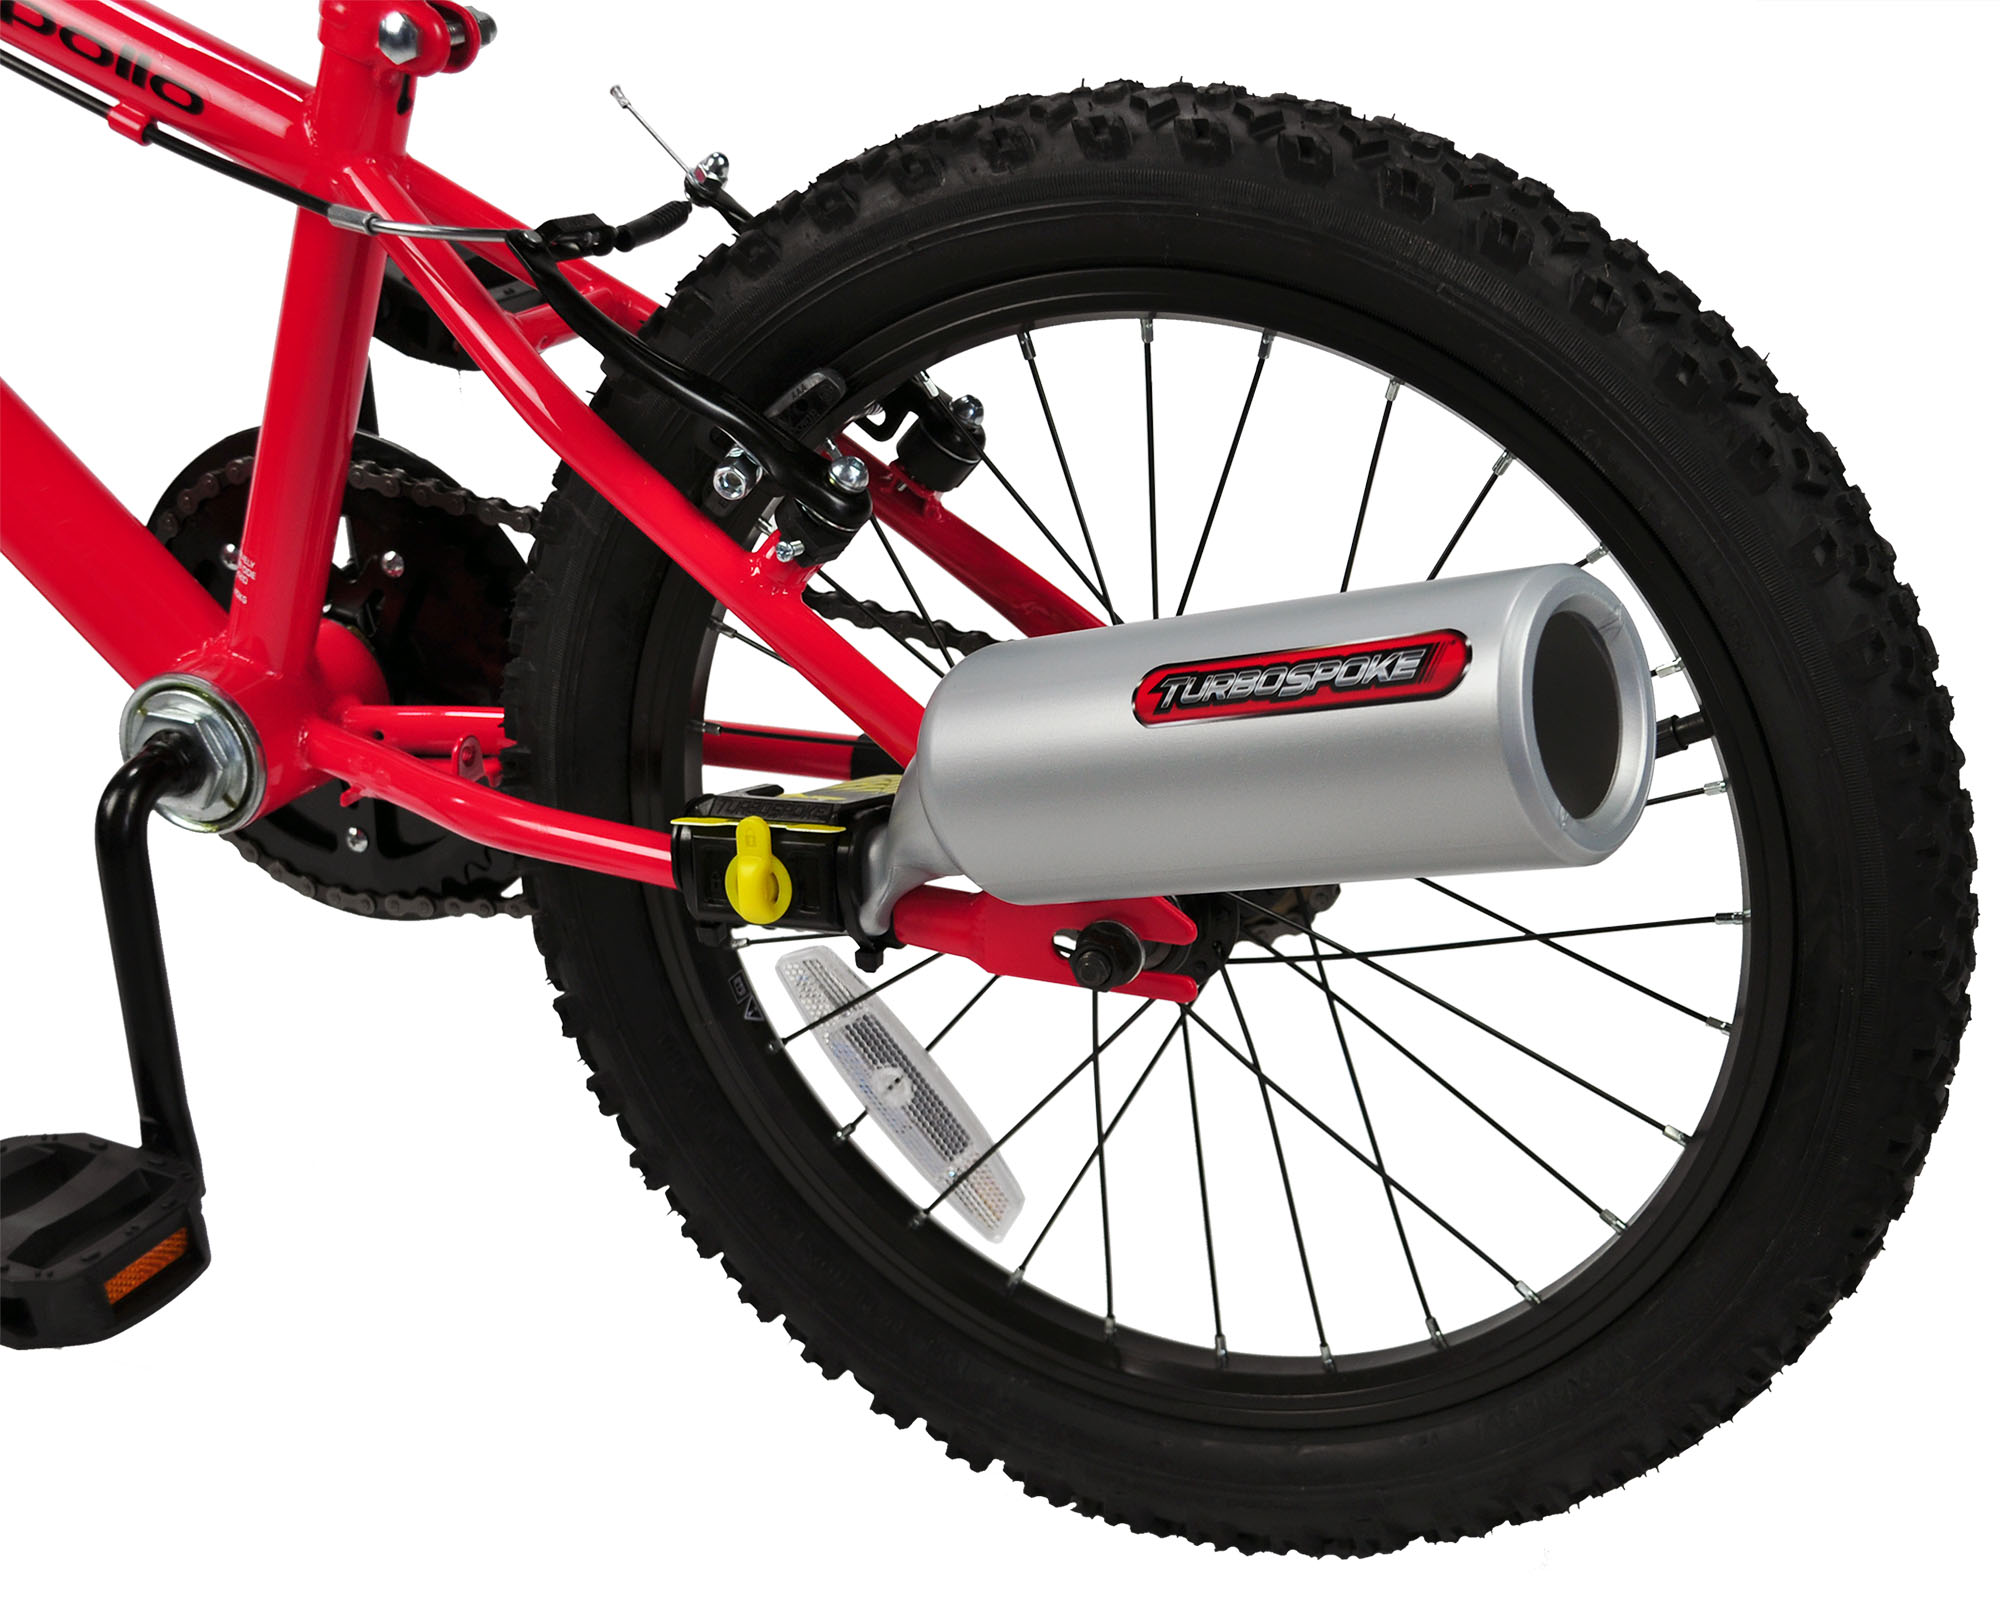 Turbospoke Bike Exhaust System - image 3 of 10